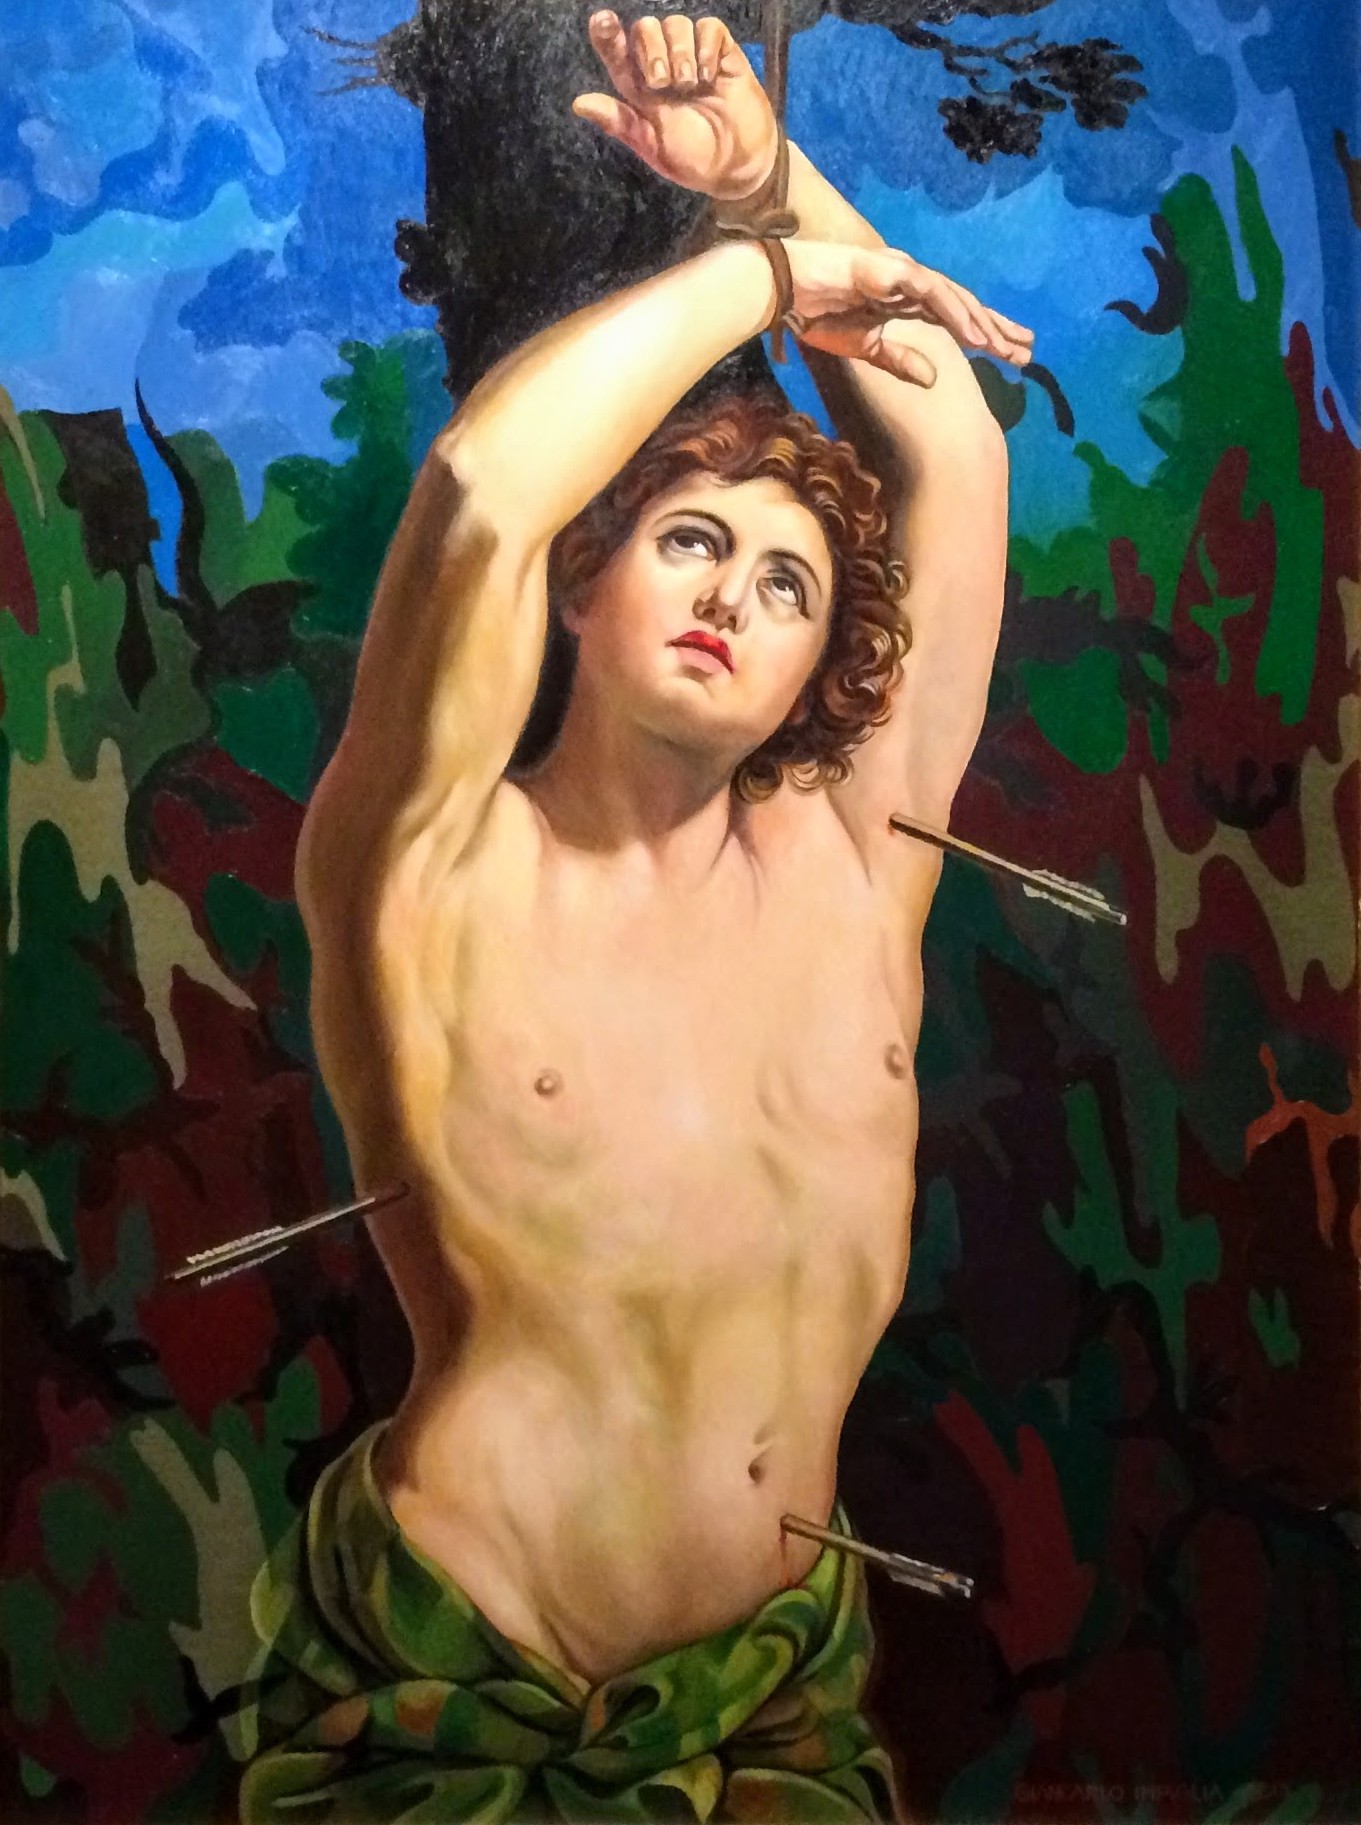   Martyrdom ,&nbsp;2015, Oil on camouflage, canvas, 31 x 41" 